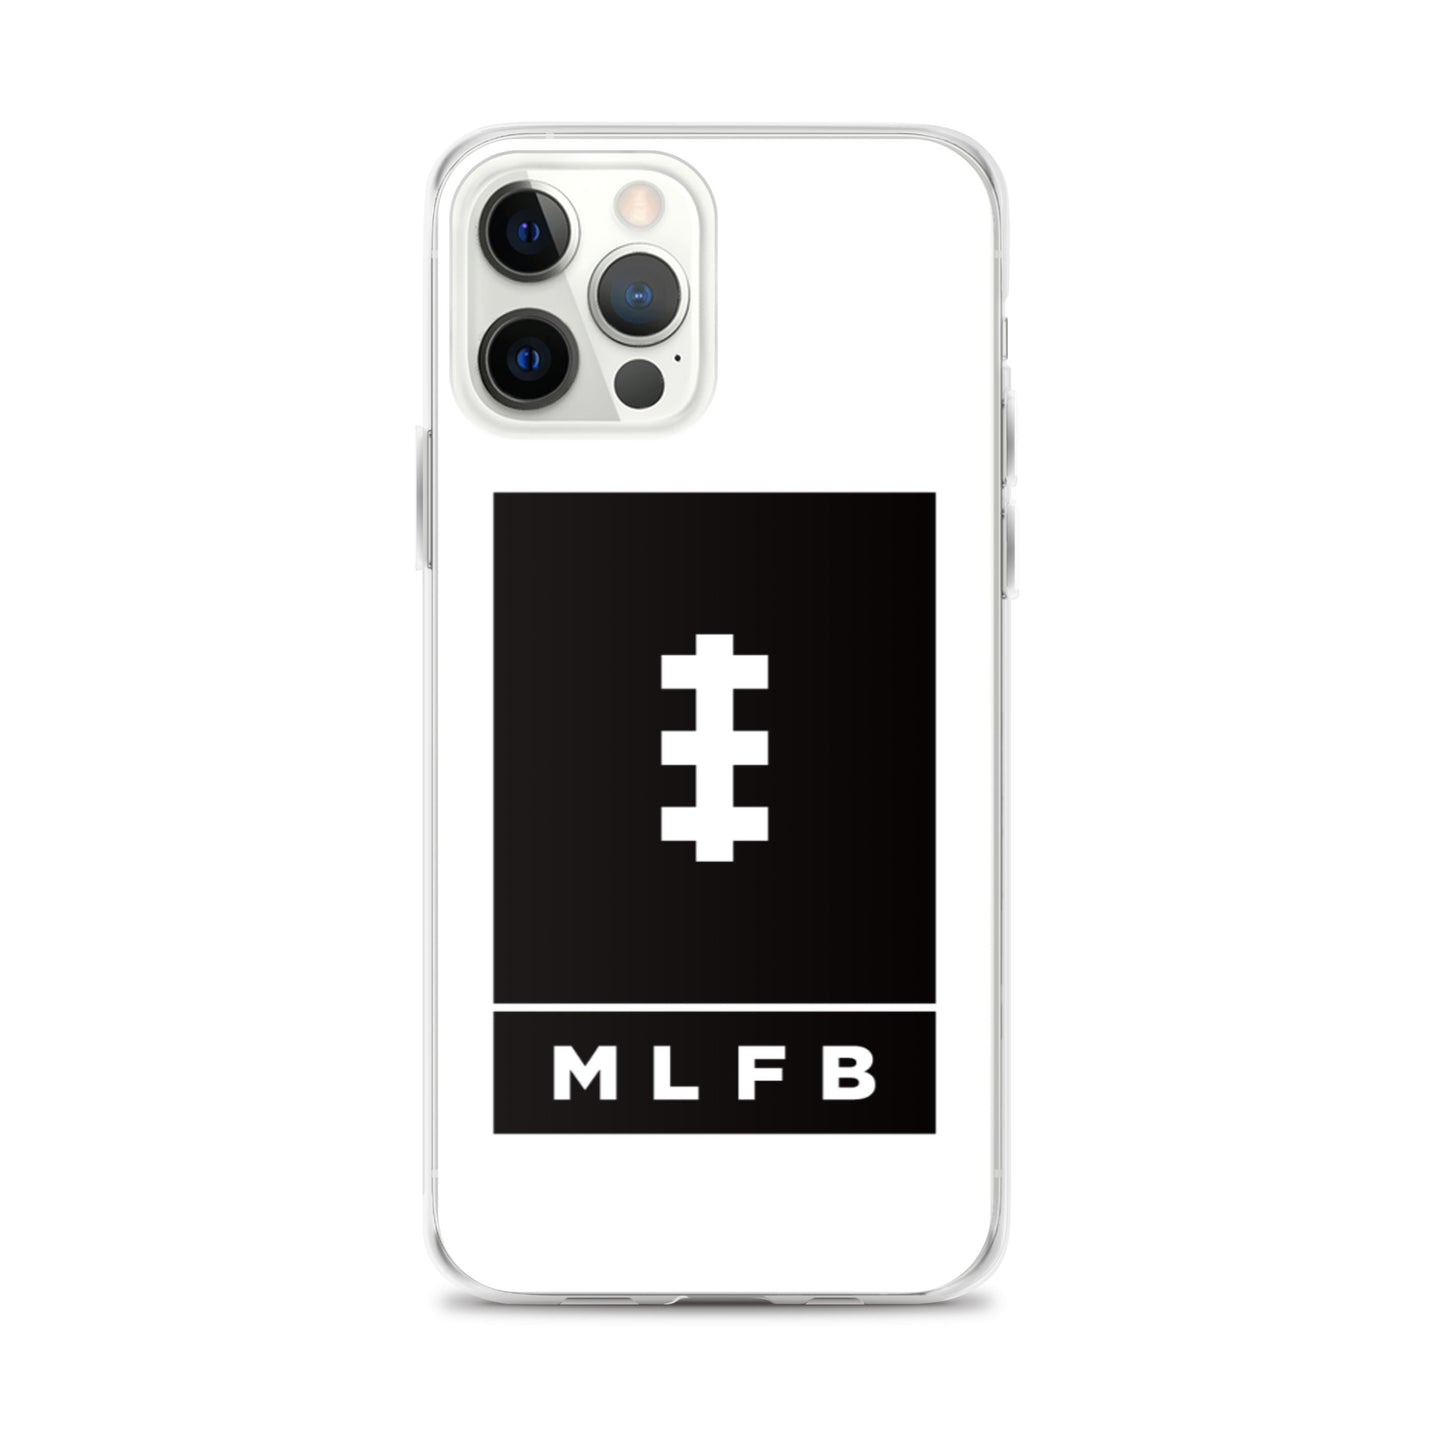 MLFB iPhone Case